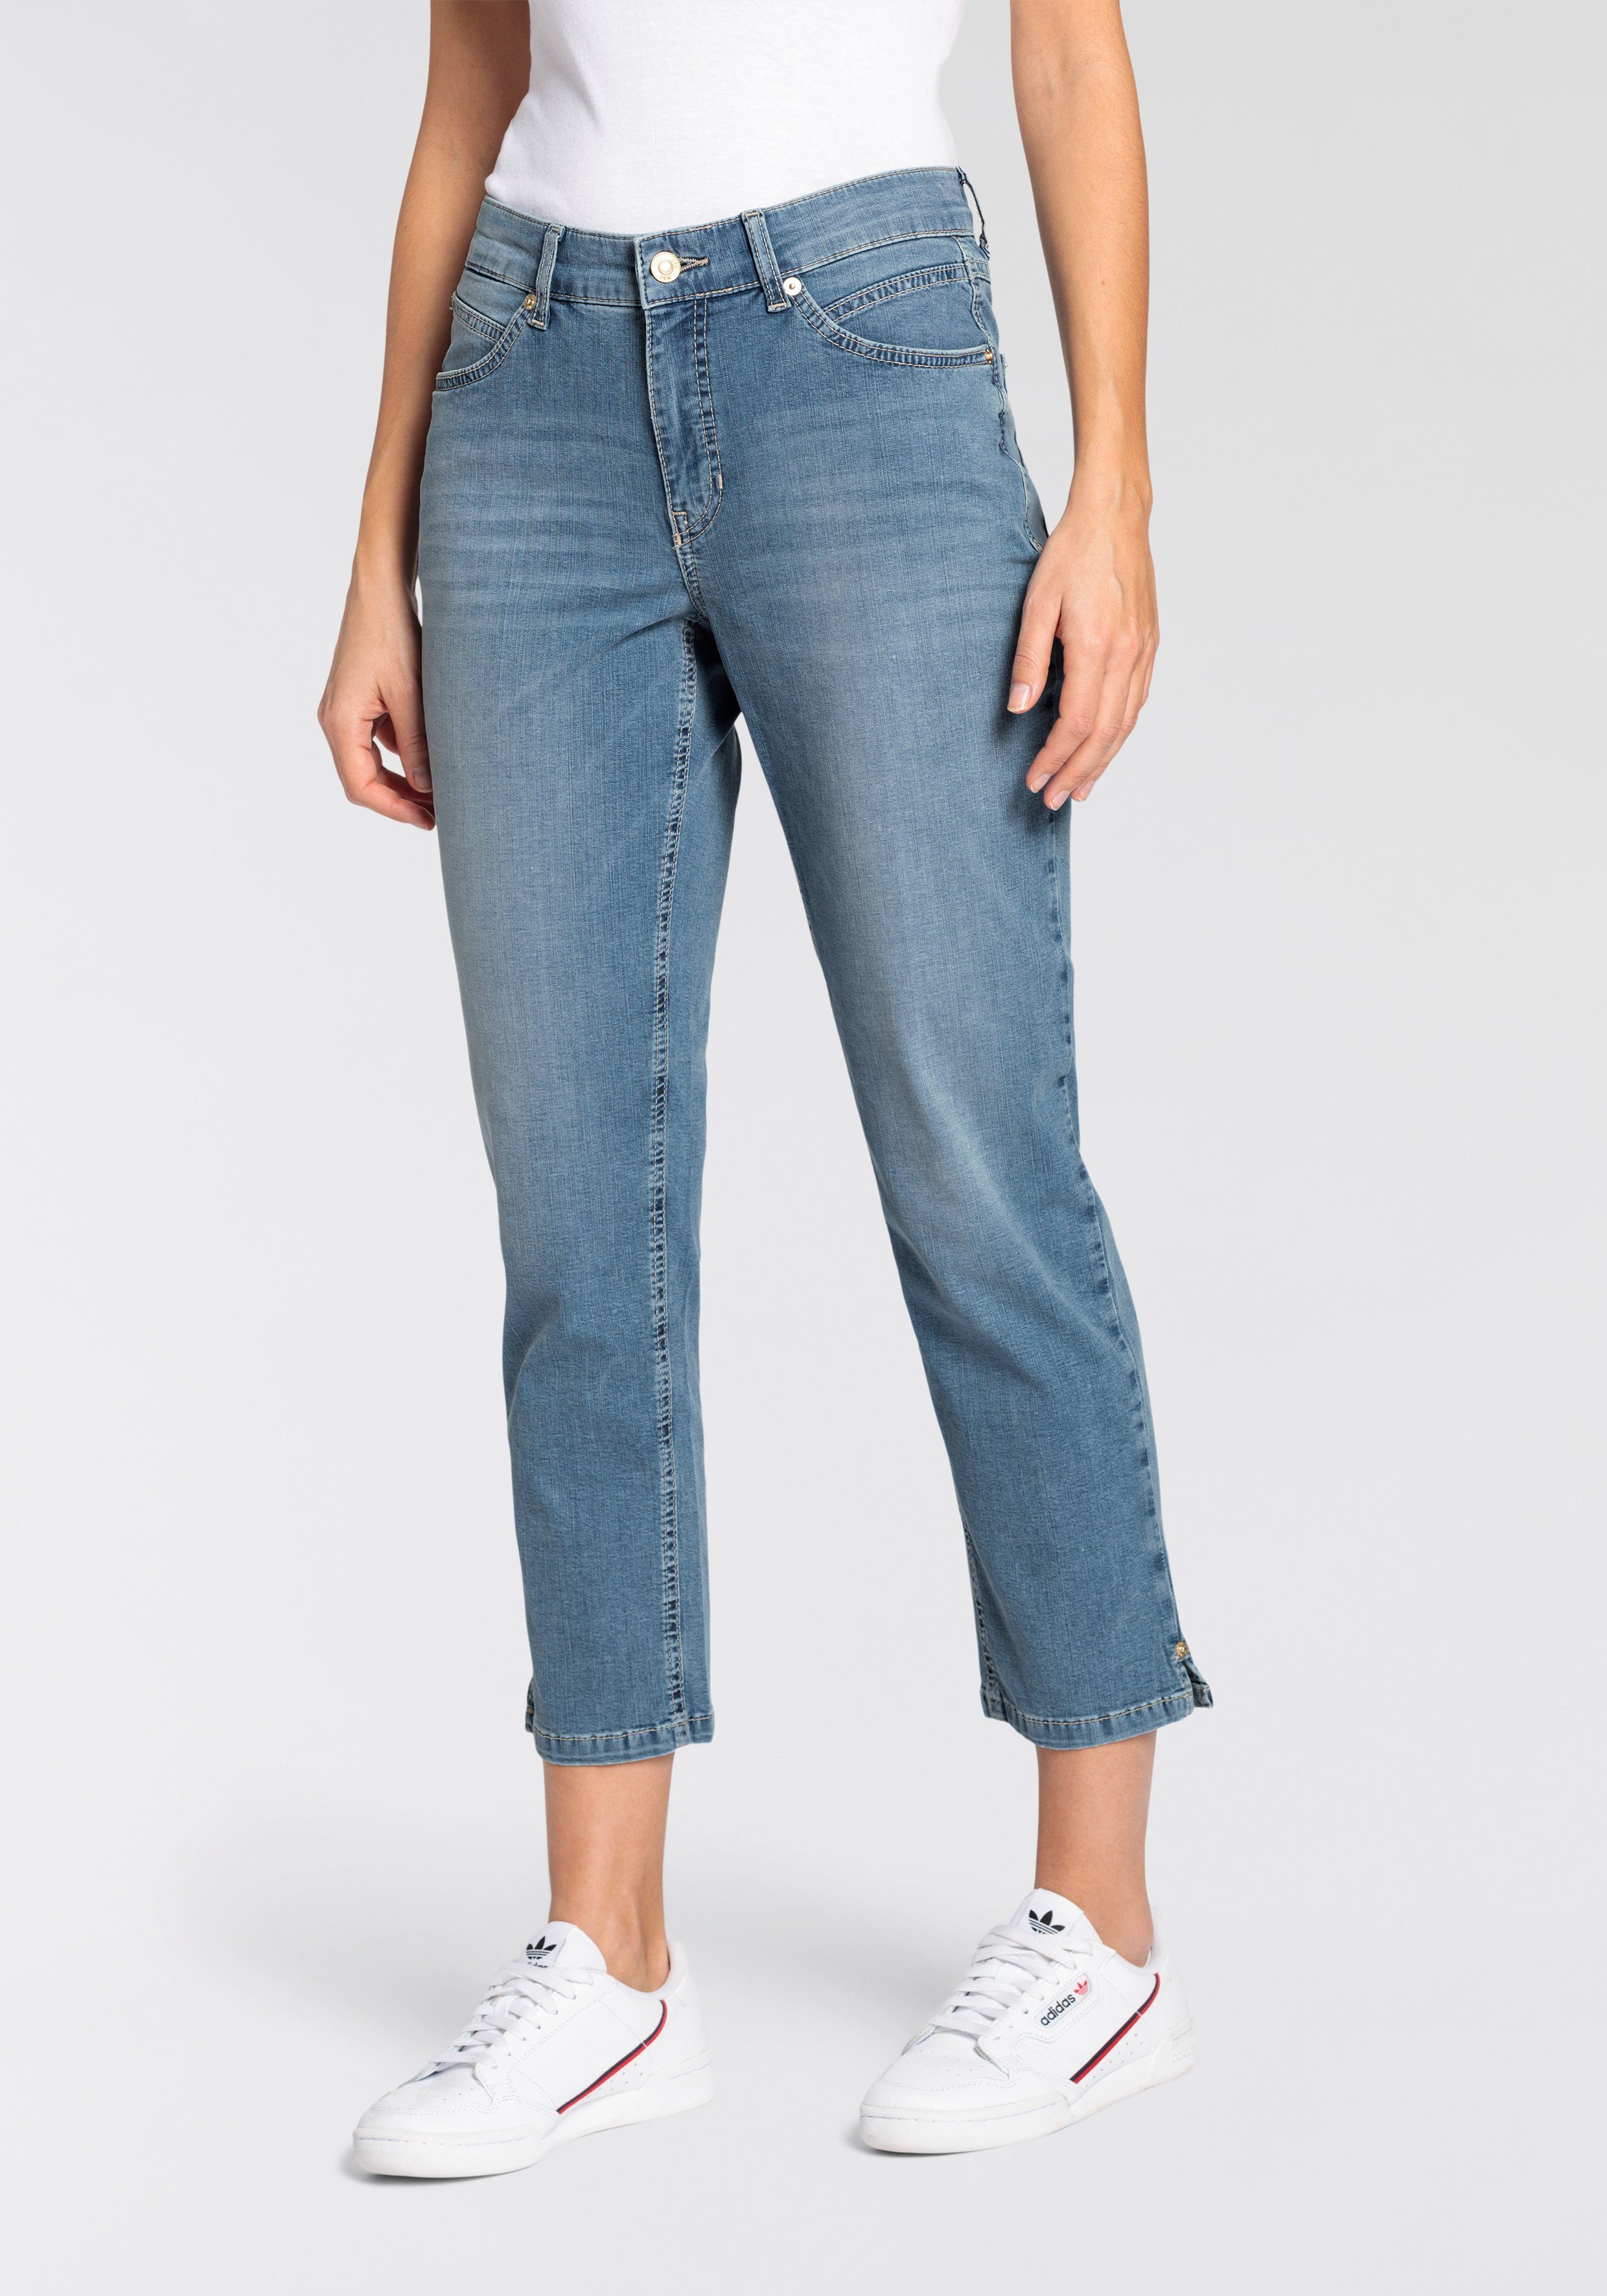 MAC 7/8 jeans